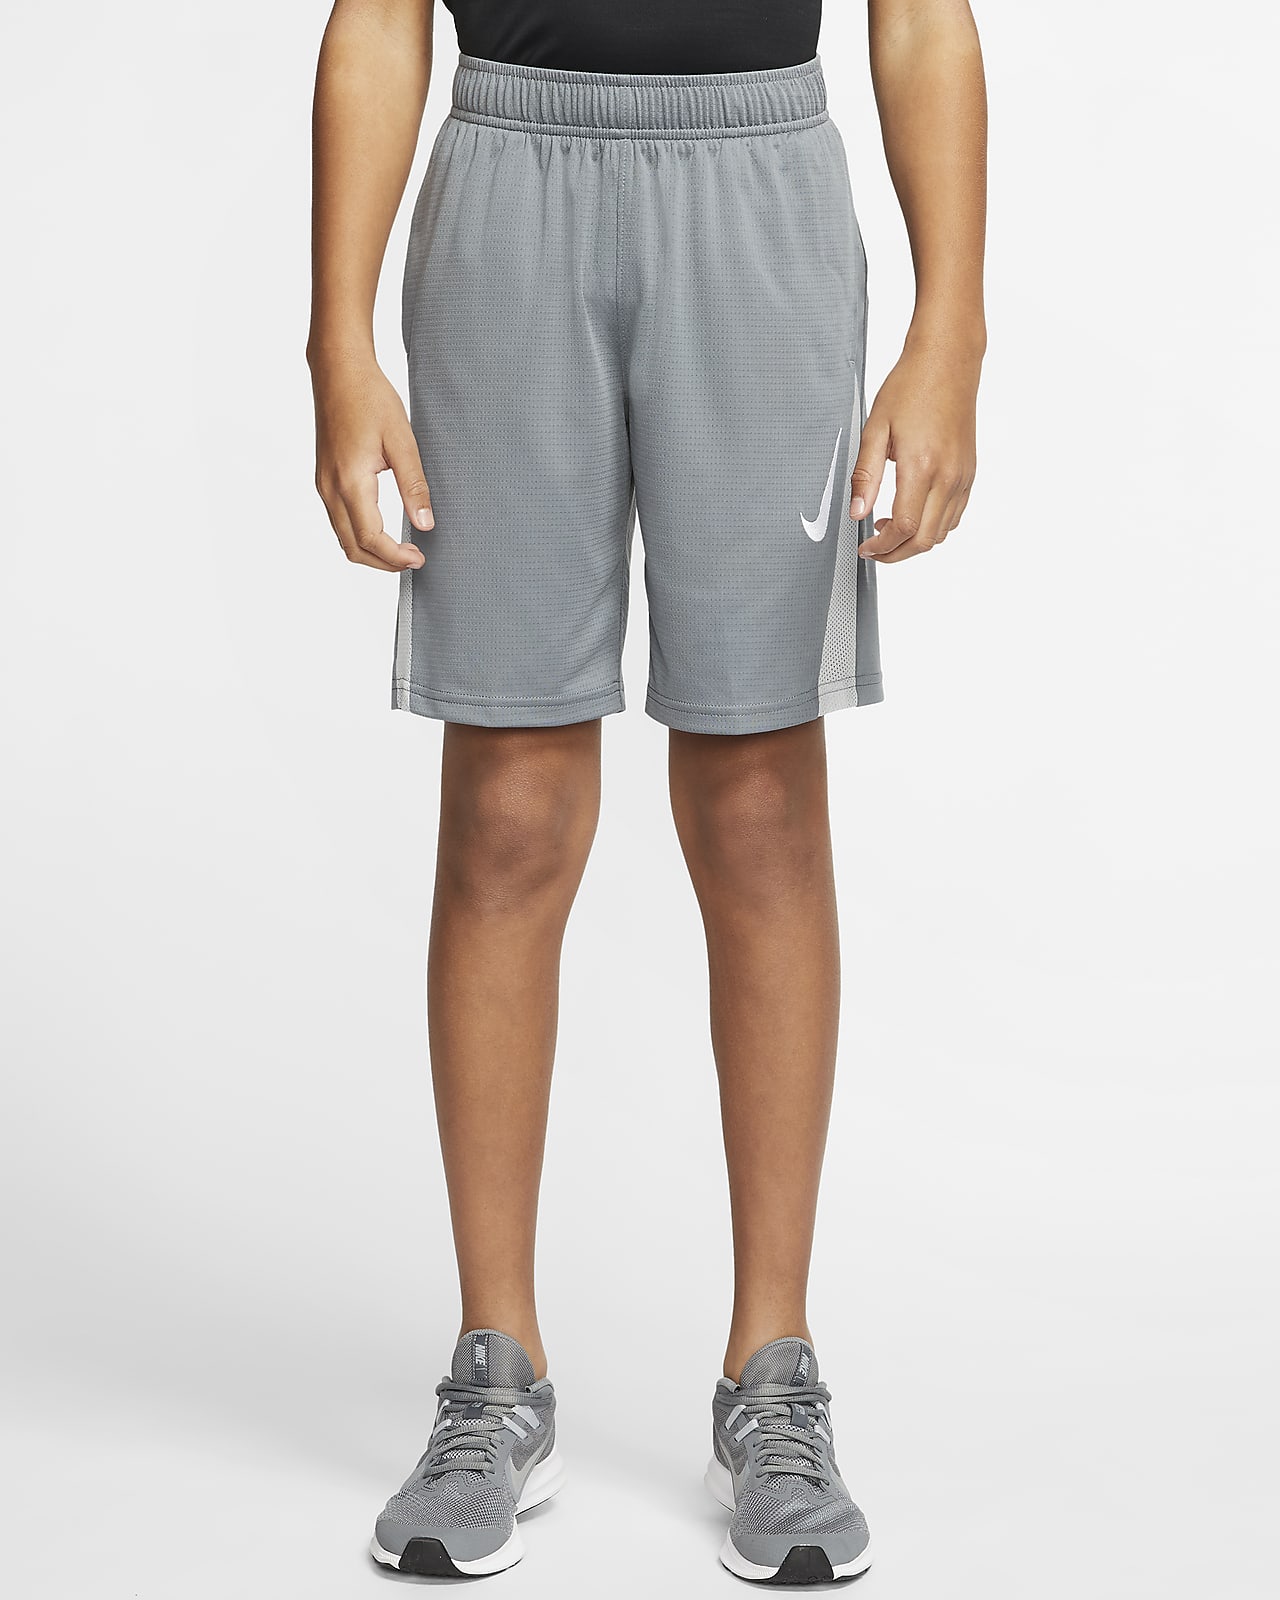 Nike Big Kids’ (Boys') Training Shorts